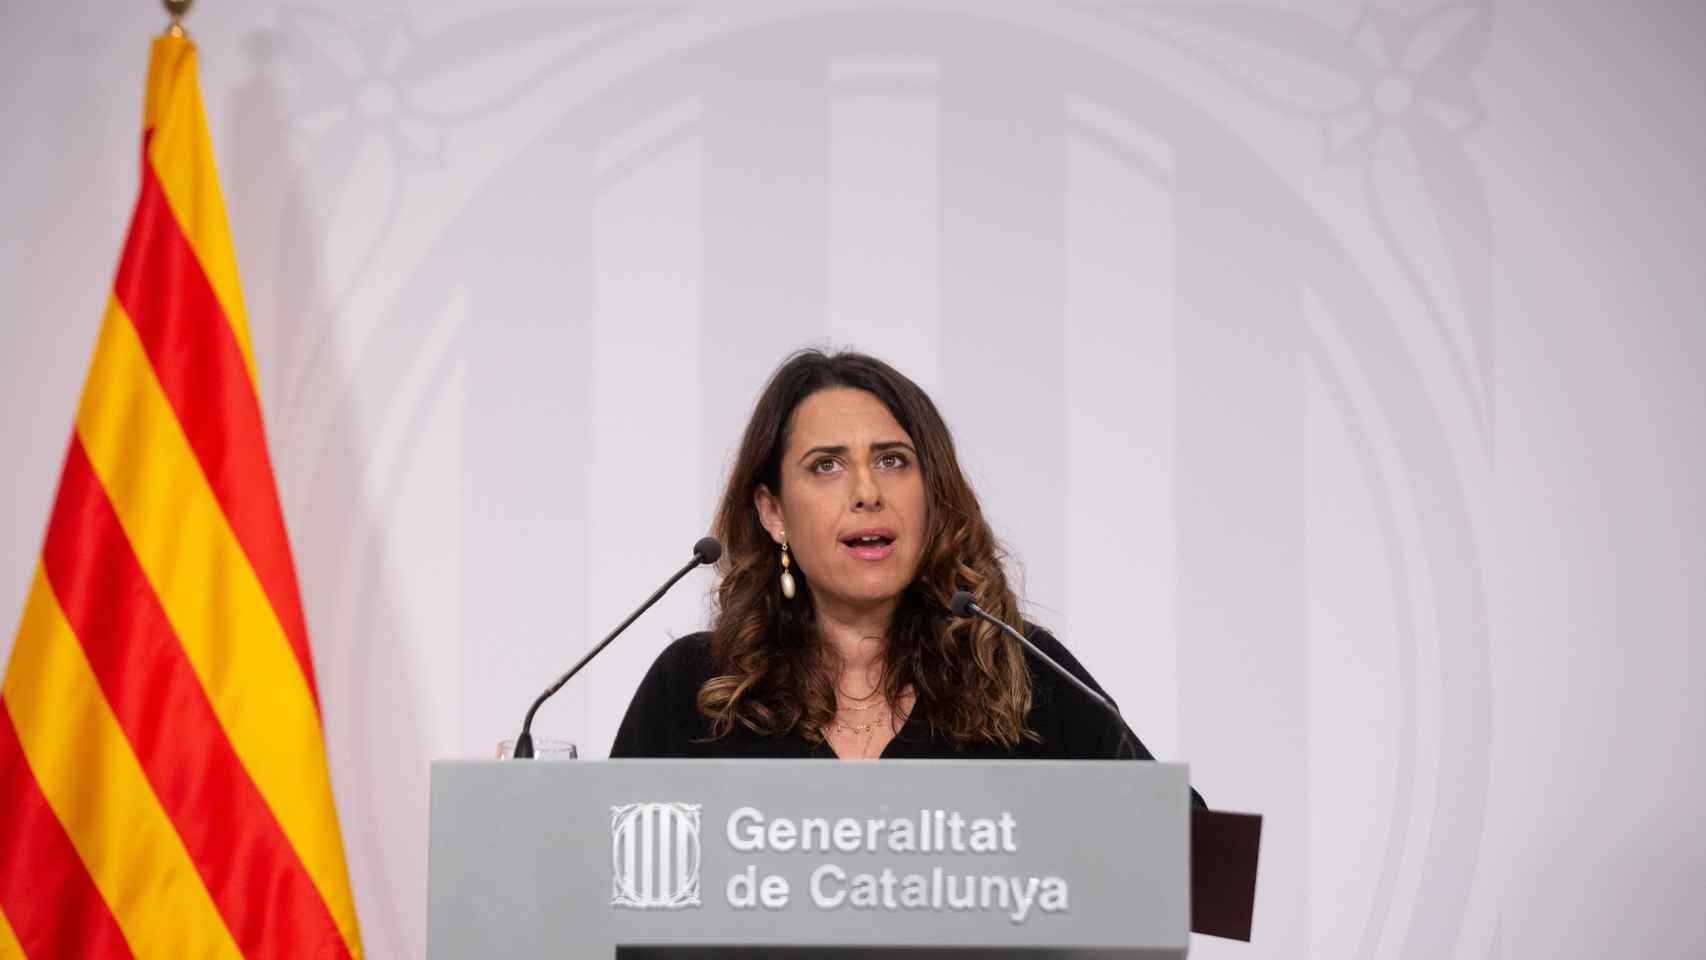 La portavoz del Govern, Patrícia Plaja, tras una reunión del Consell Executiu, en la Generalitat de Cataluña / David Zorrakino - EUROPA PRESS